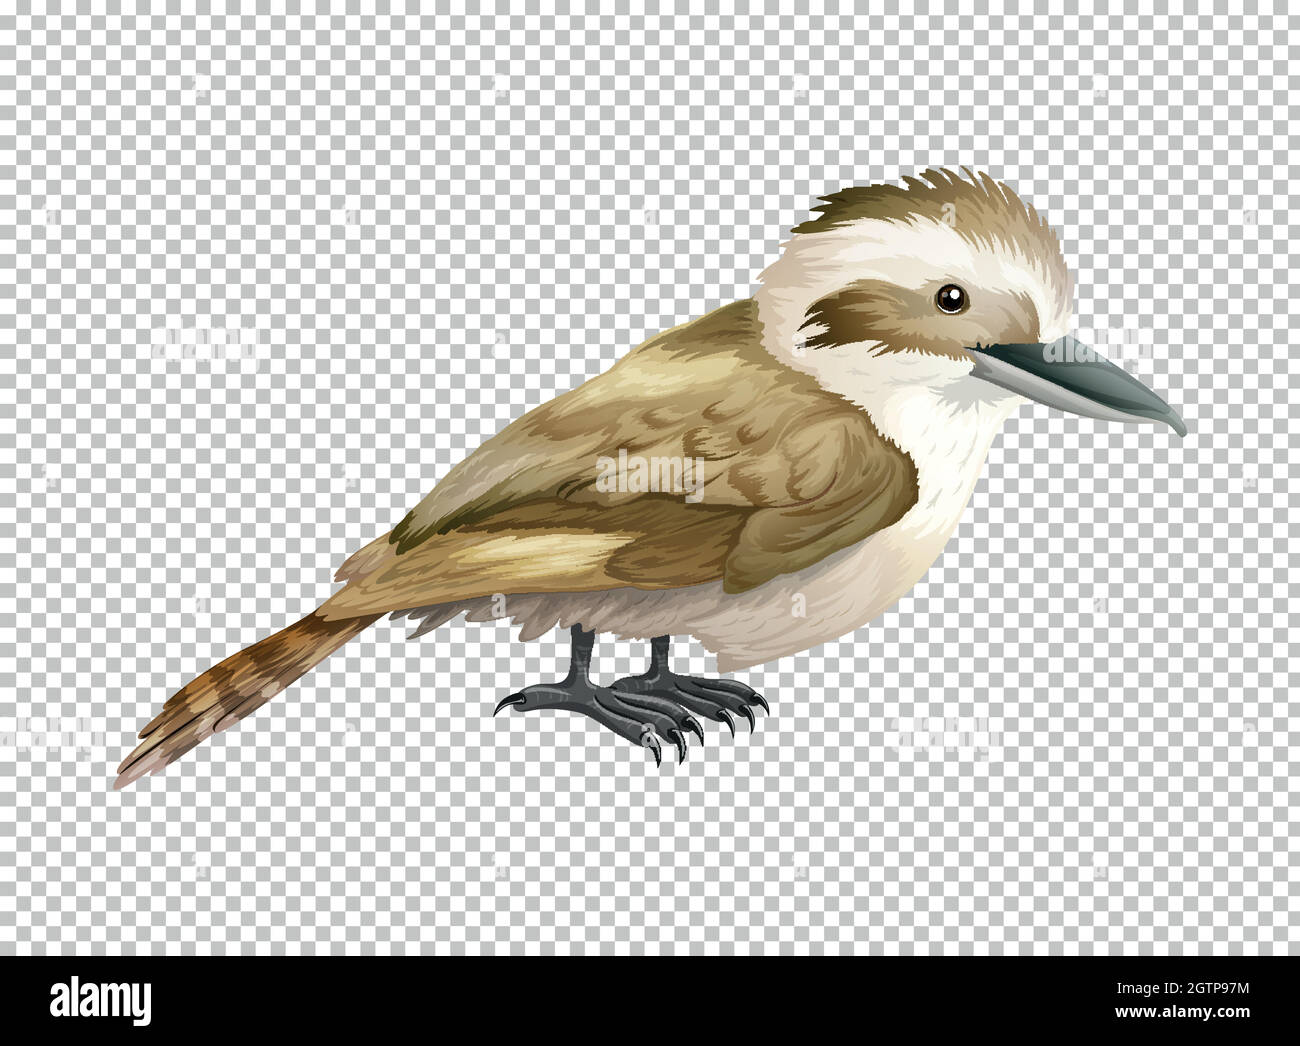 Kookaburra bird on transparent background Stock Vector